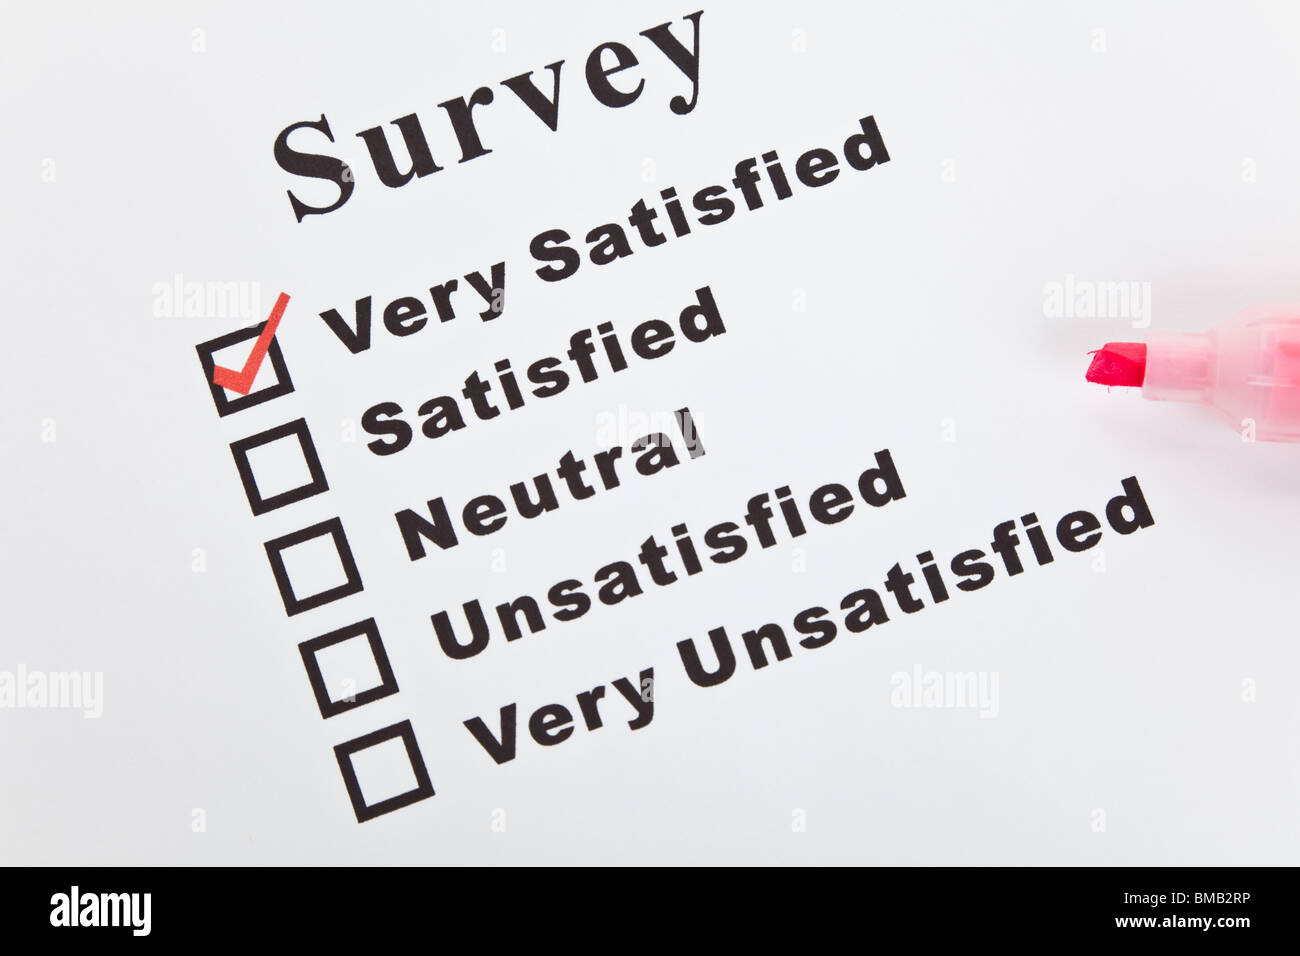 Survey and questionnaire, business concept Stock Photo